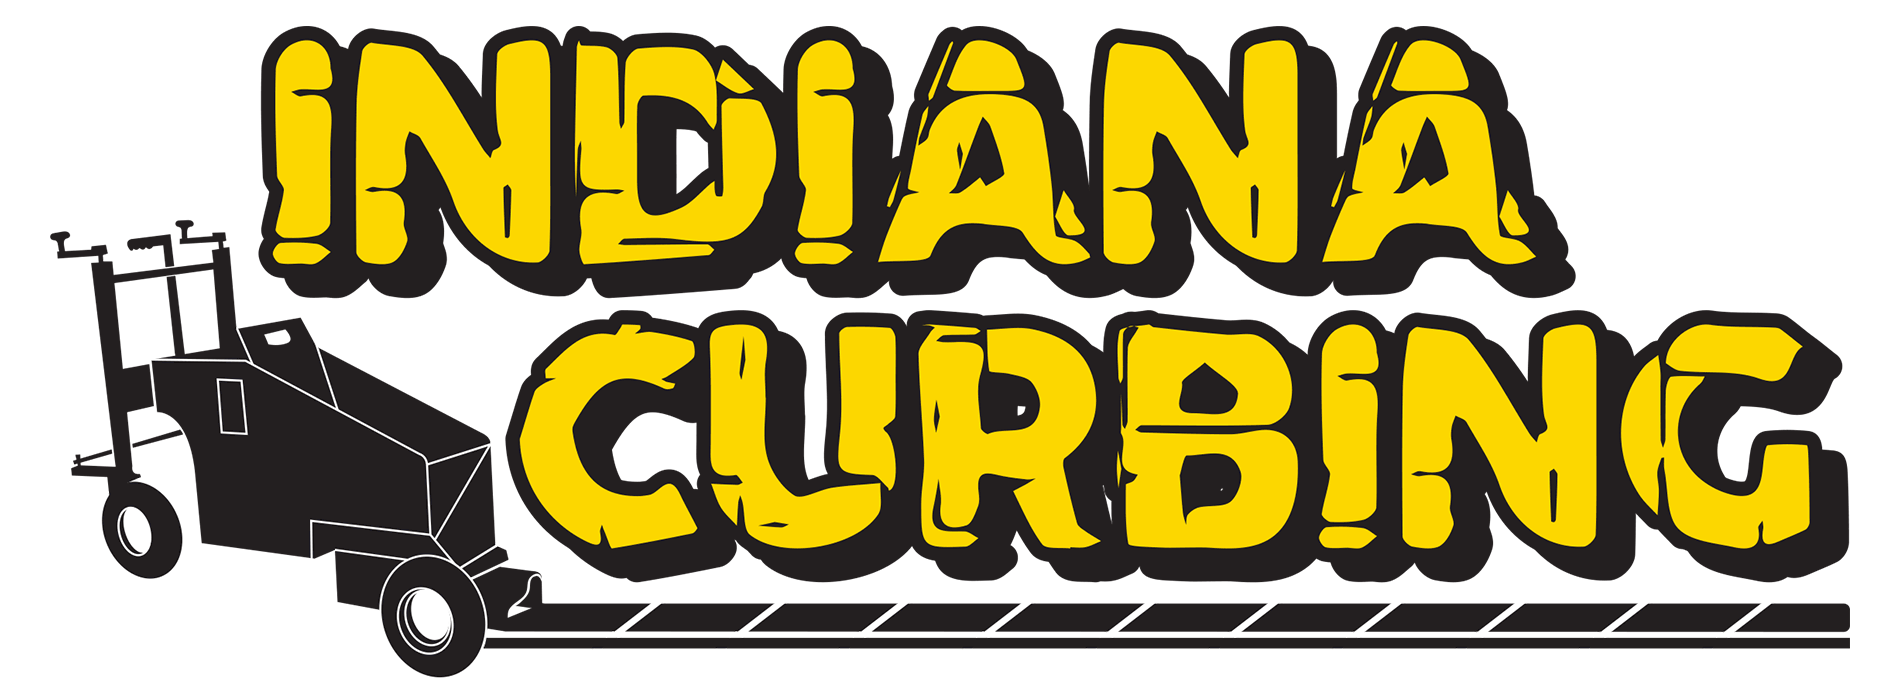 Indiana Curbing